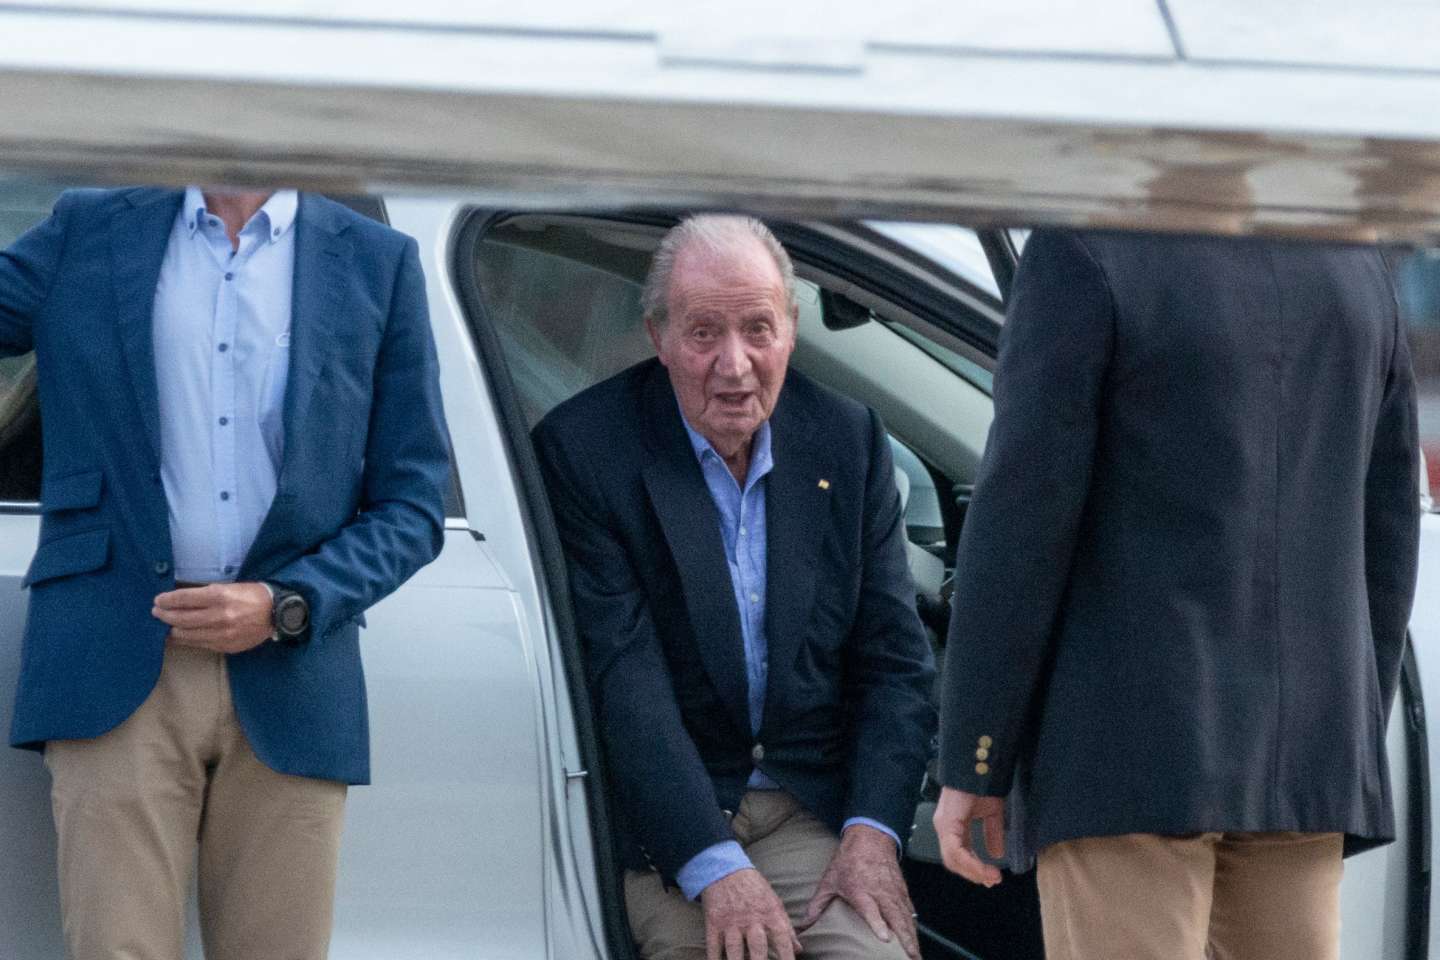 In Spain, the return of Juan Carlos embarrasses the king, his son